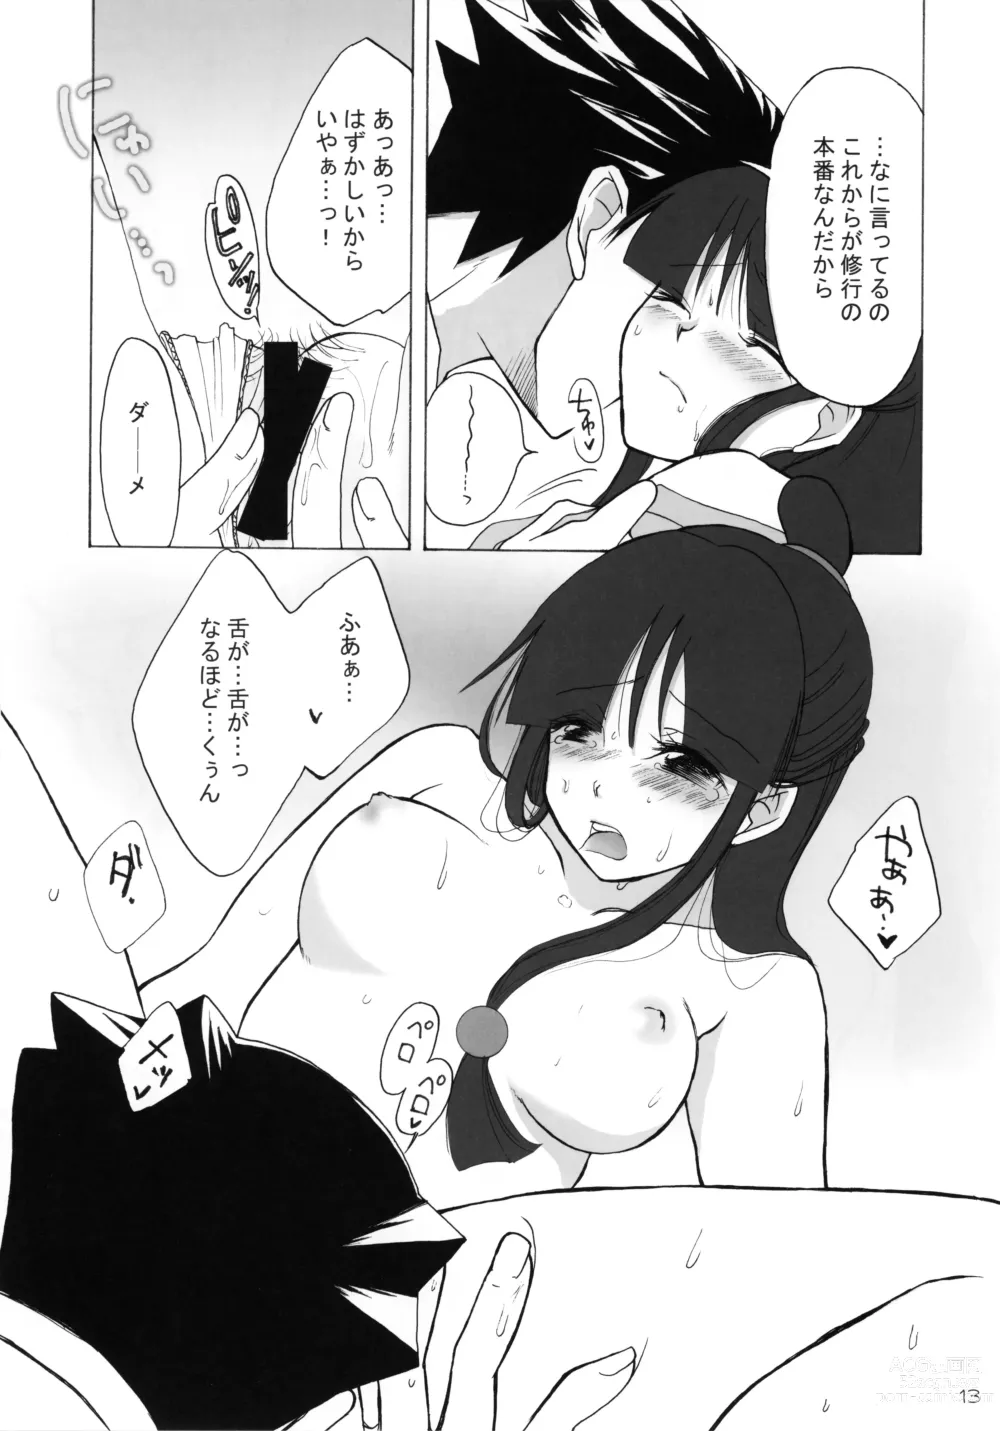 Page 13 of doujinshi Secret reversal